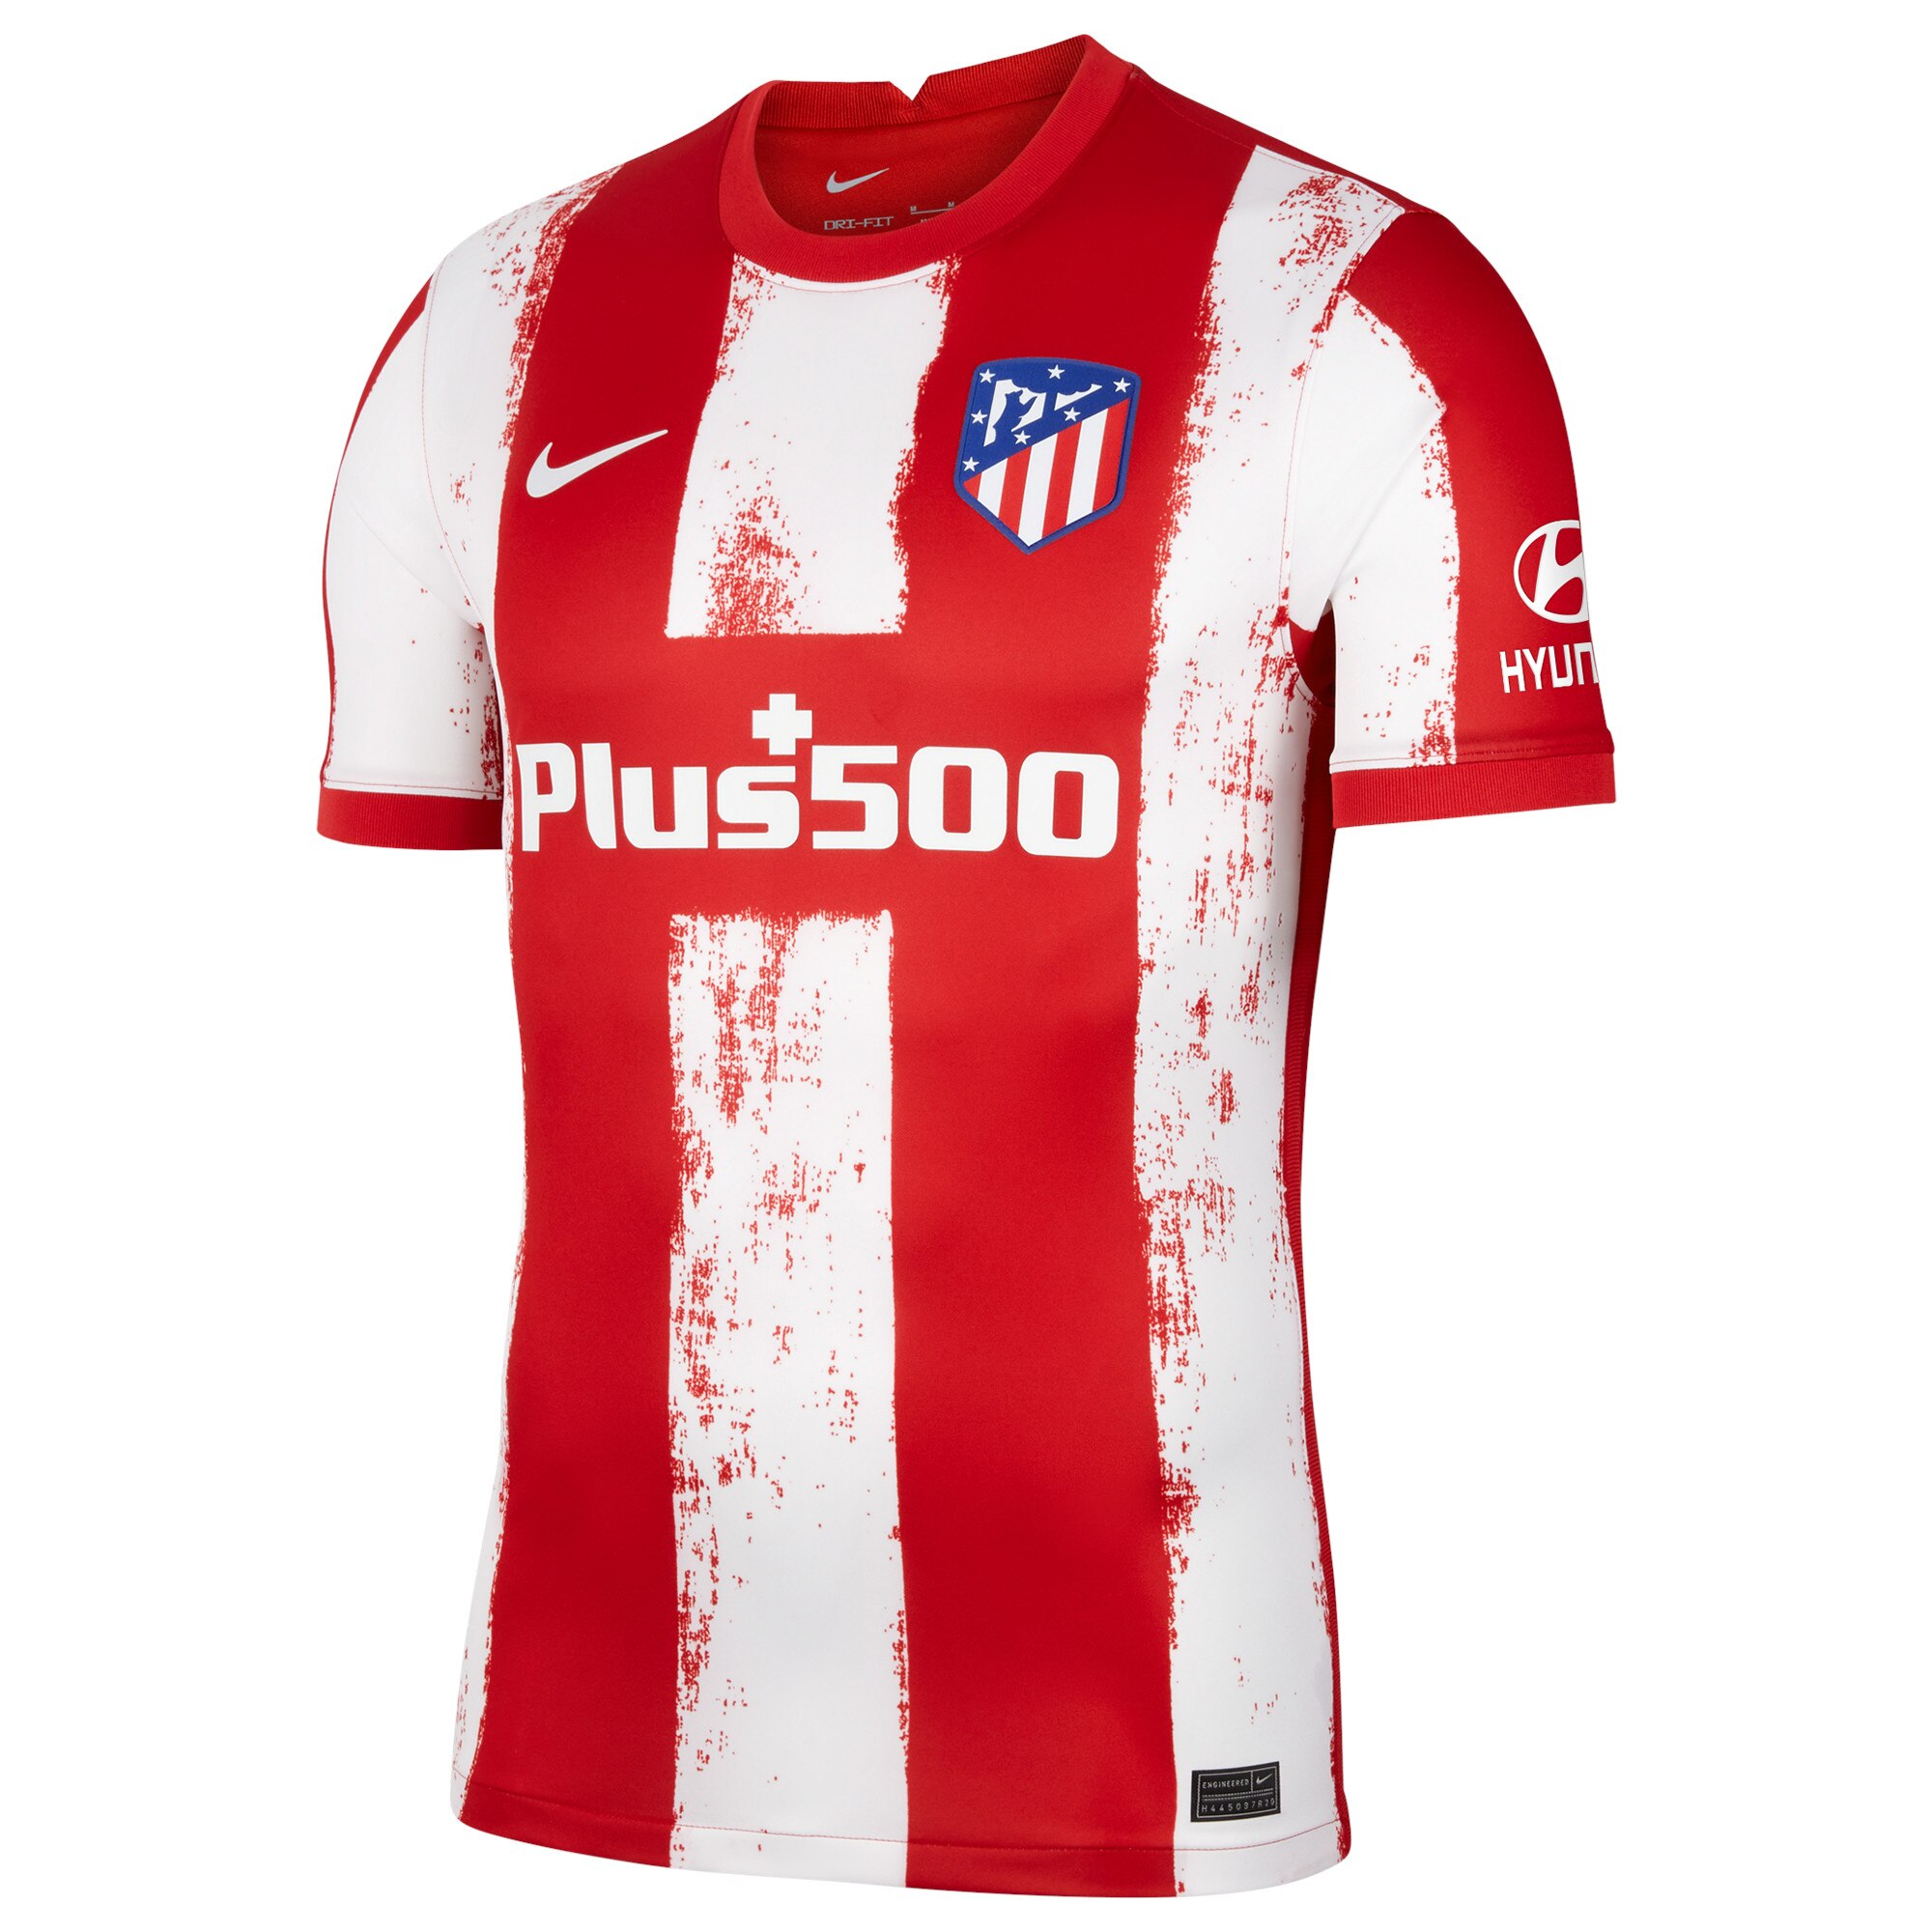 Atlético de Madrid Metropolitano Home Stadium Shirt 2021-22 with Reinildo 23 printing